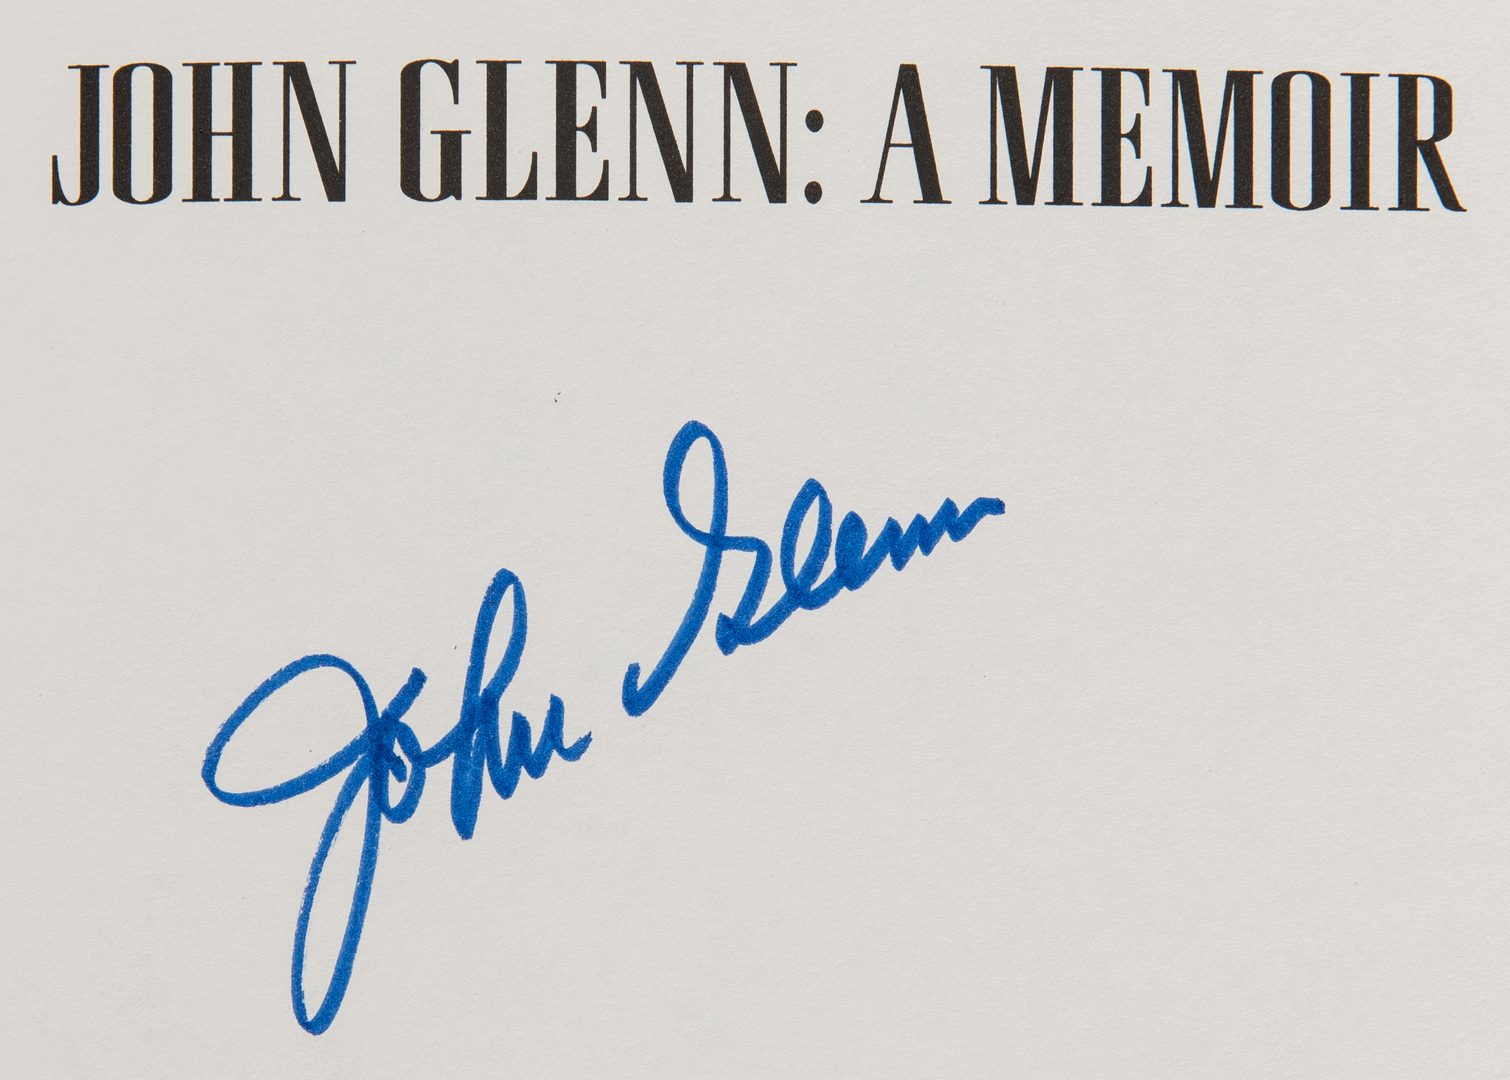 Lot 294: 6 American Astronaut Signed Books, incl. Glenn, Aldrin